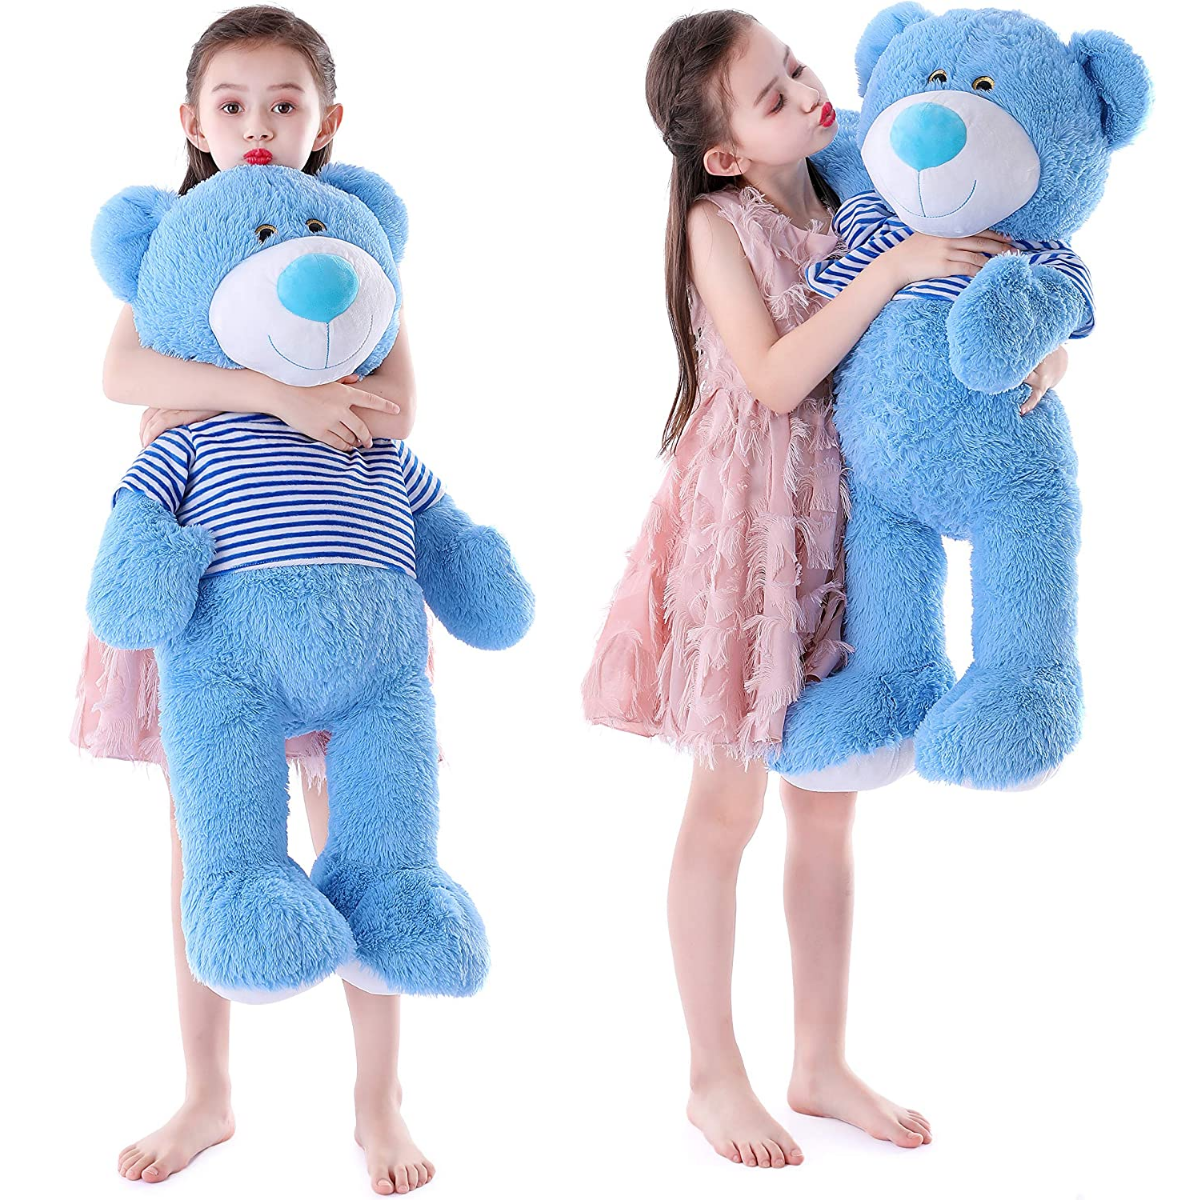 Riesiges Teddybär-Plüschtier, blau, 36 Zoll